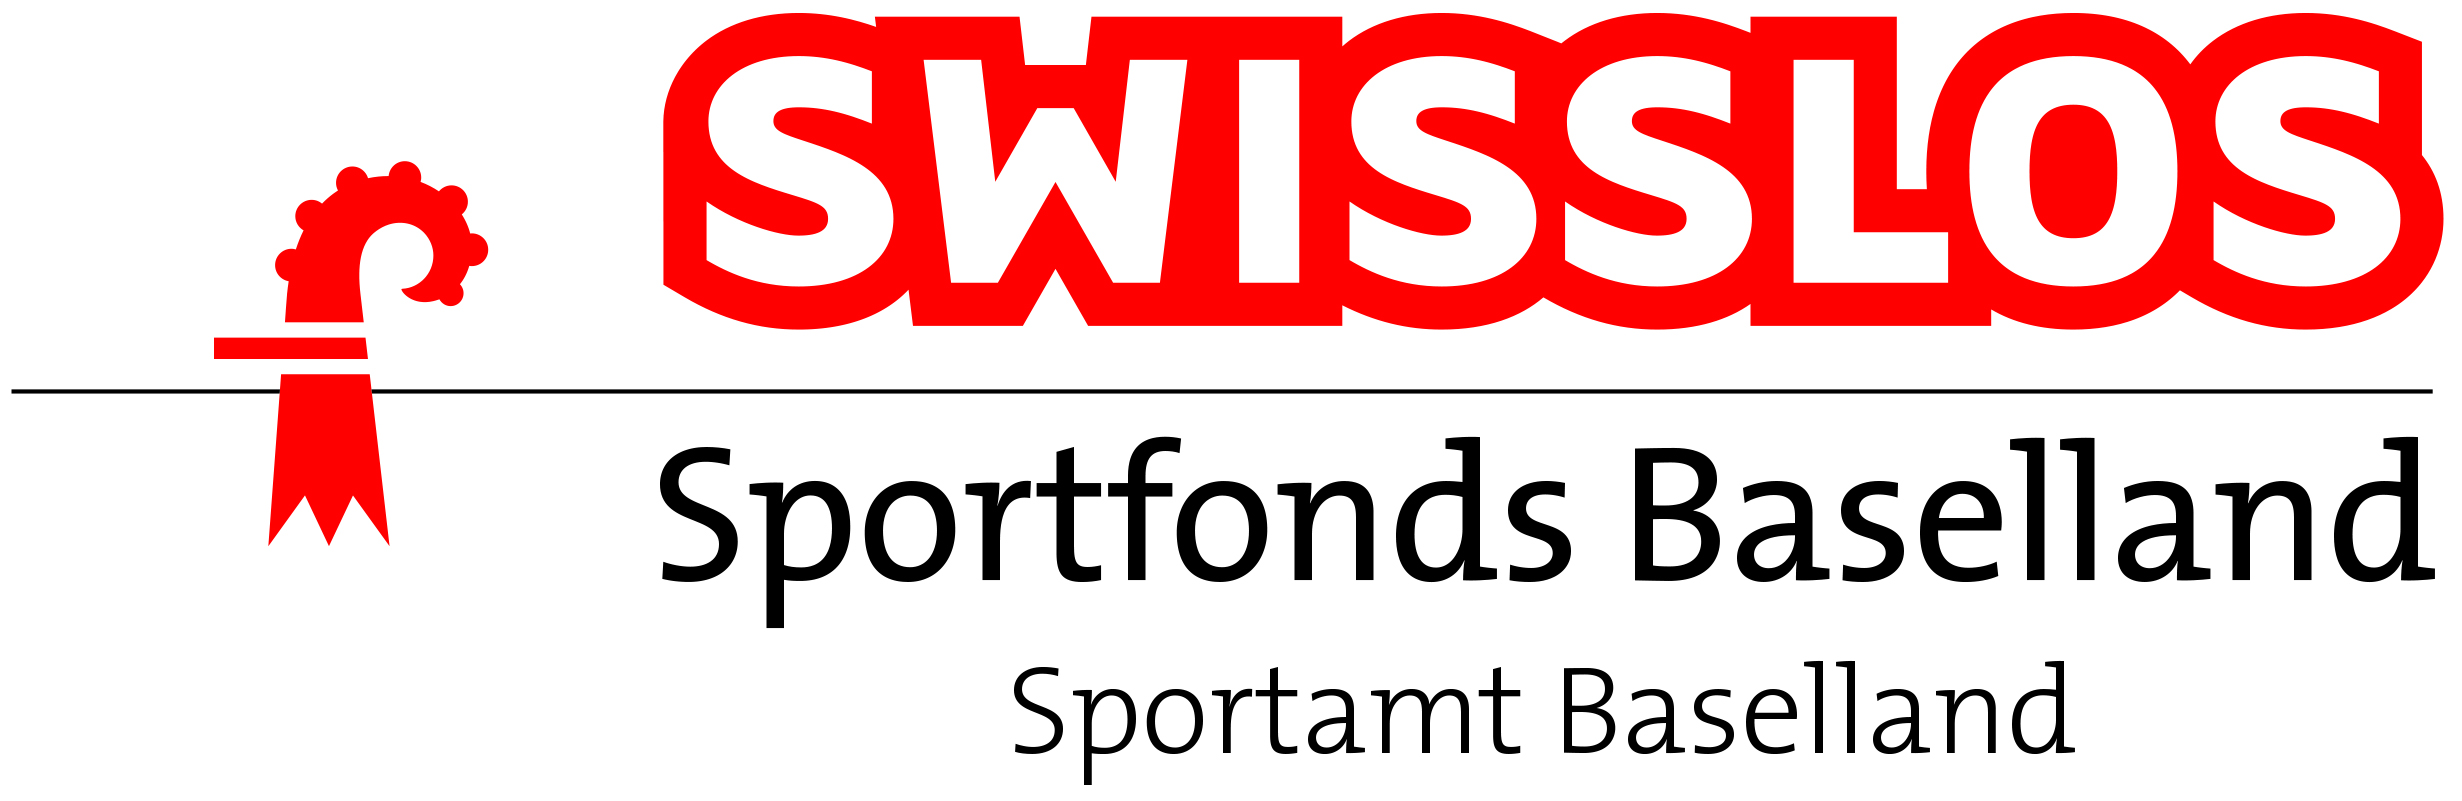 SWISSLOS Sportfond Baselland